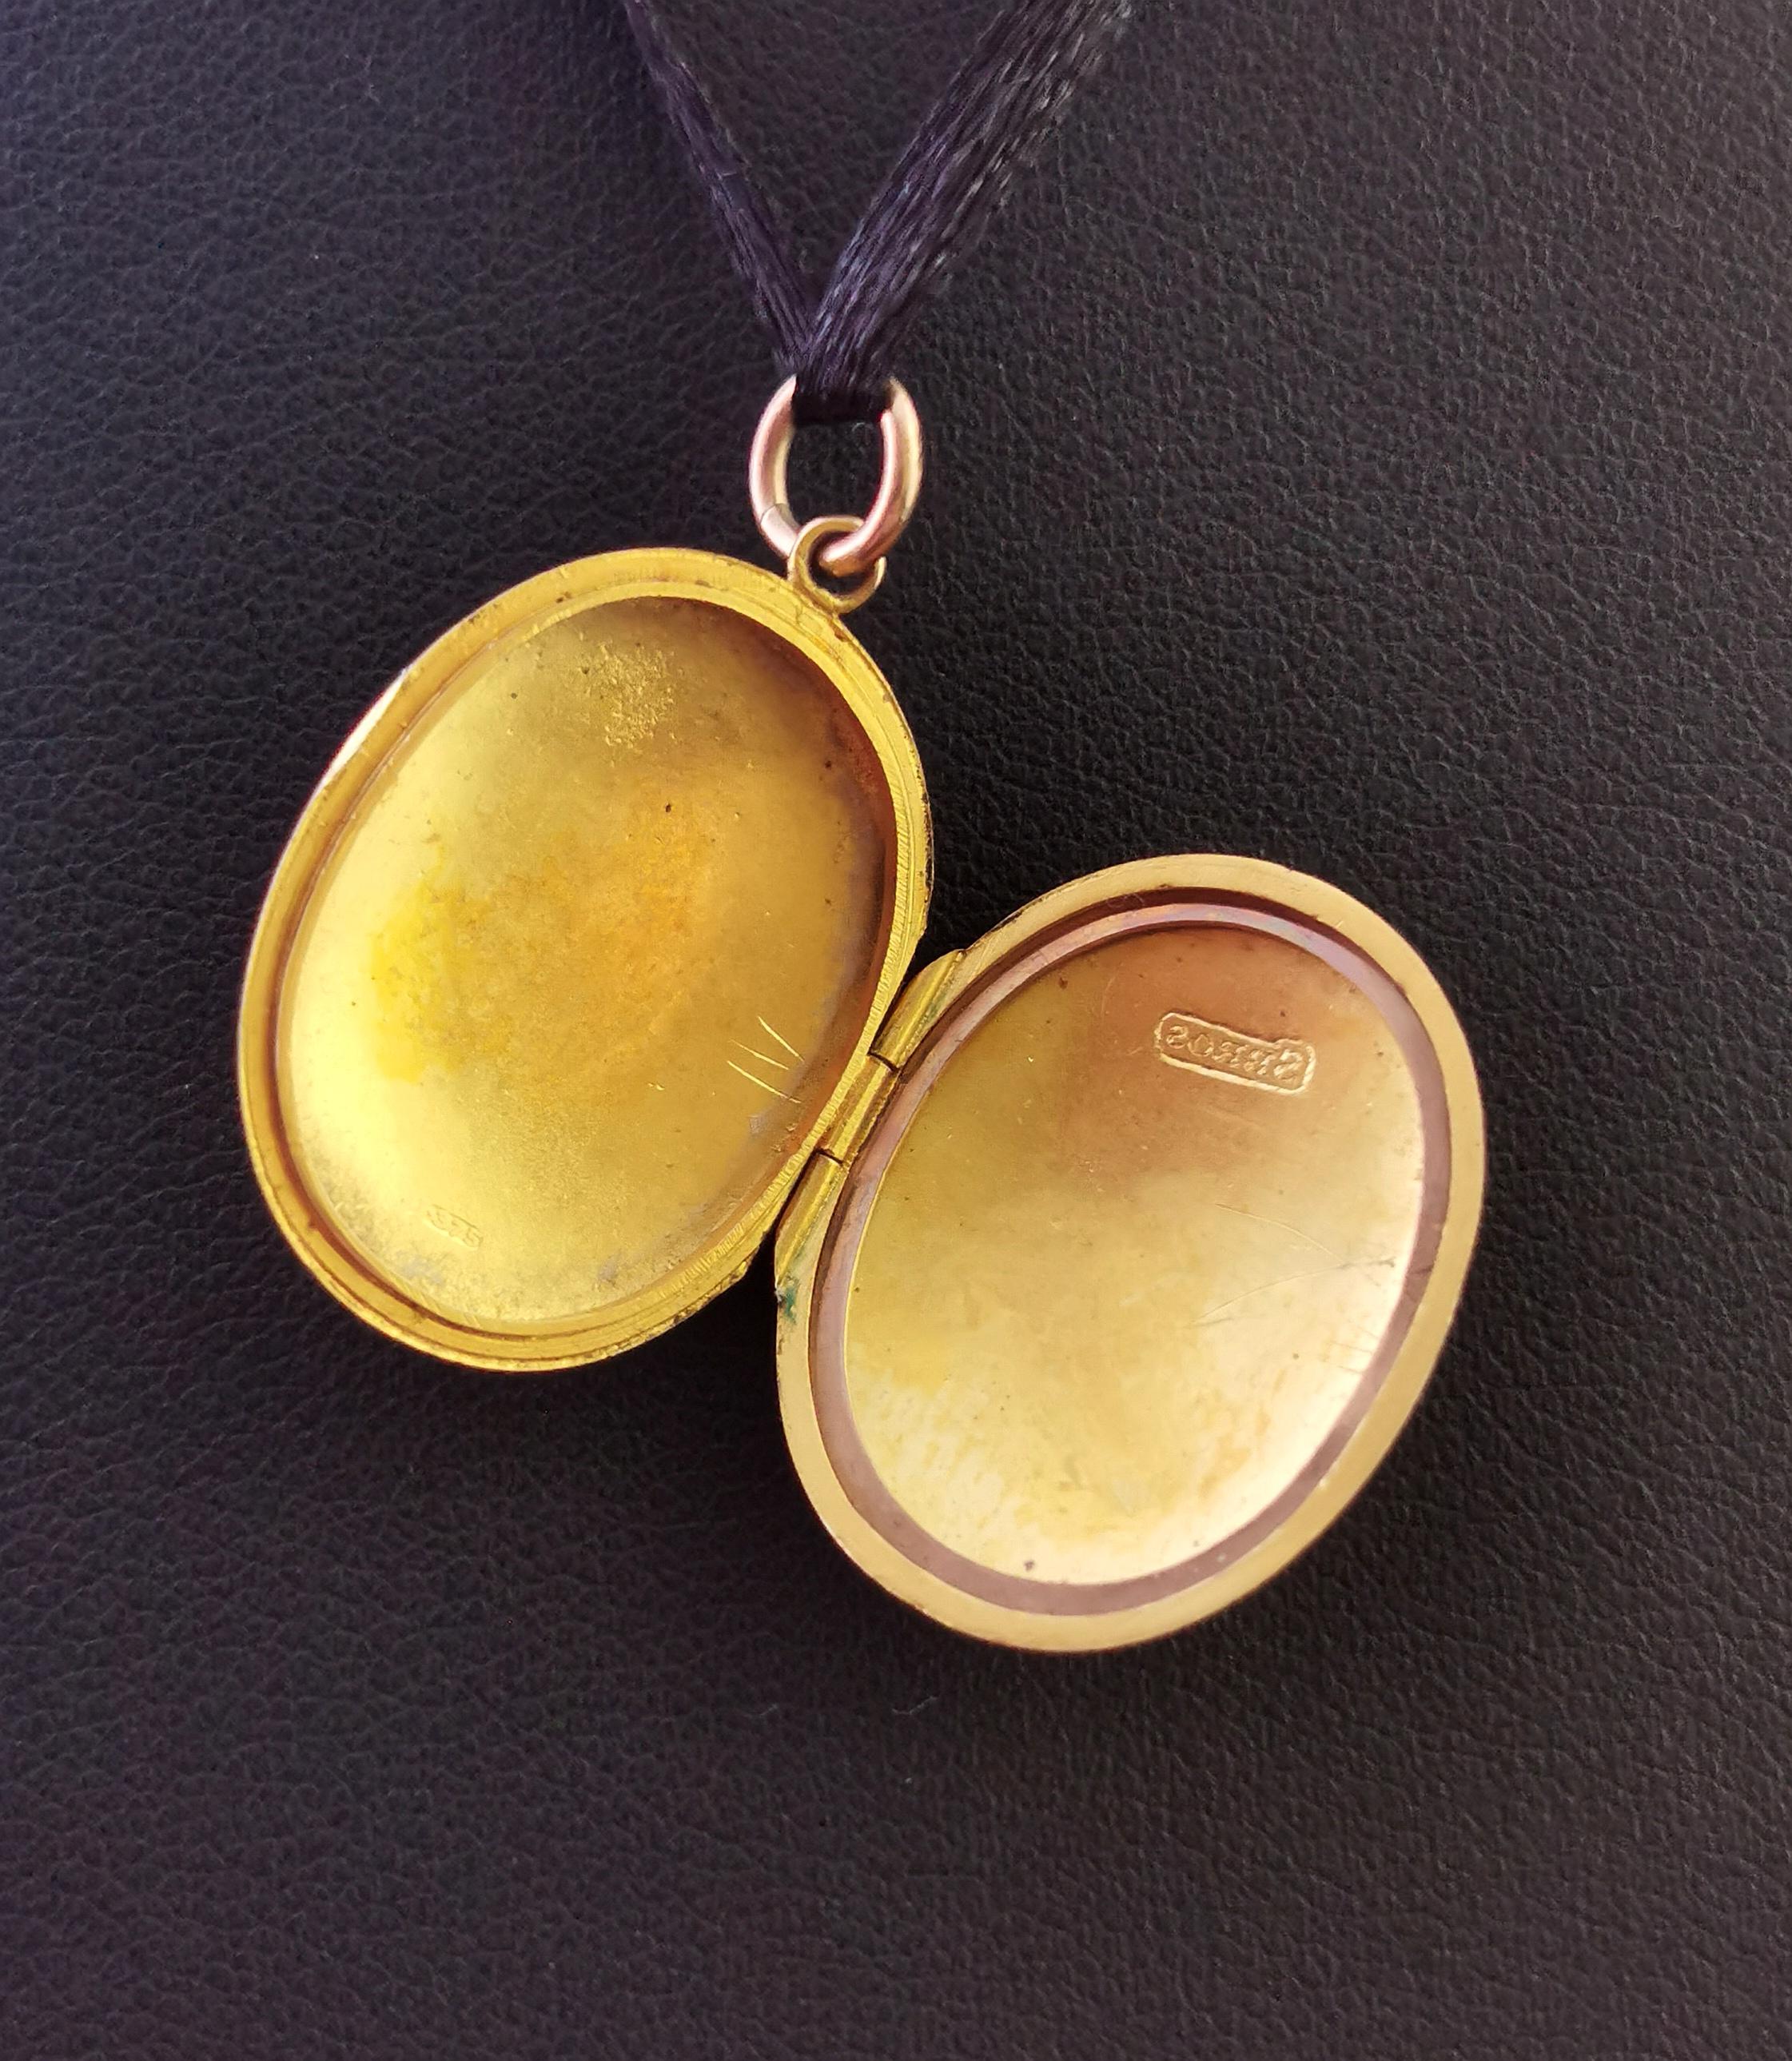 Antique 9 Karat Gold Locket Pendant, 1910s, Heart, Engraved 1